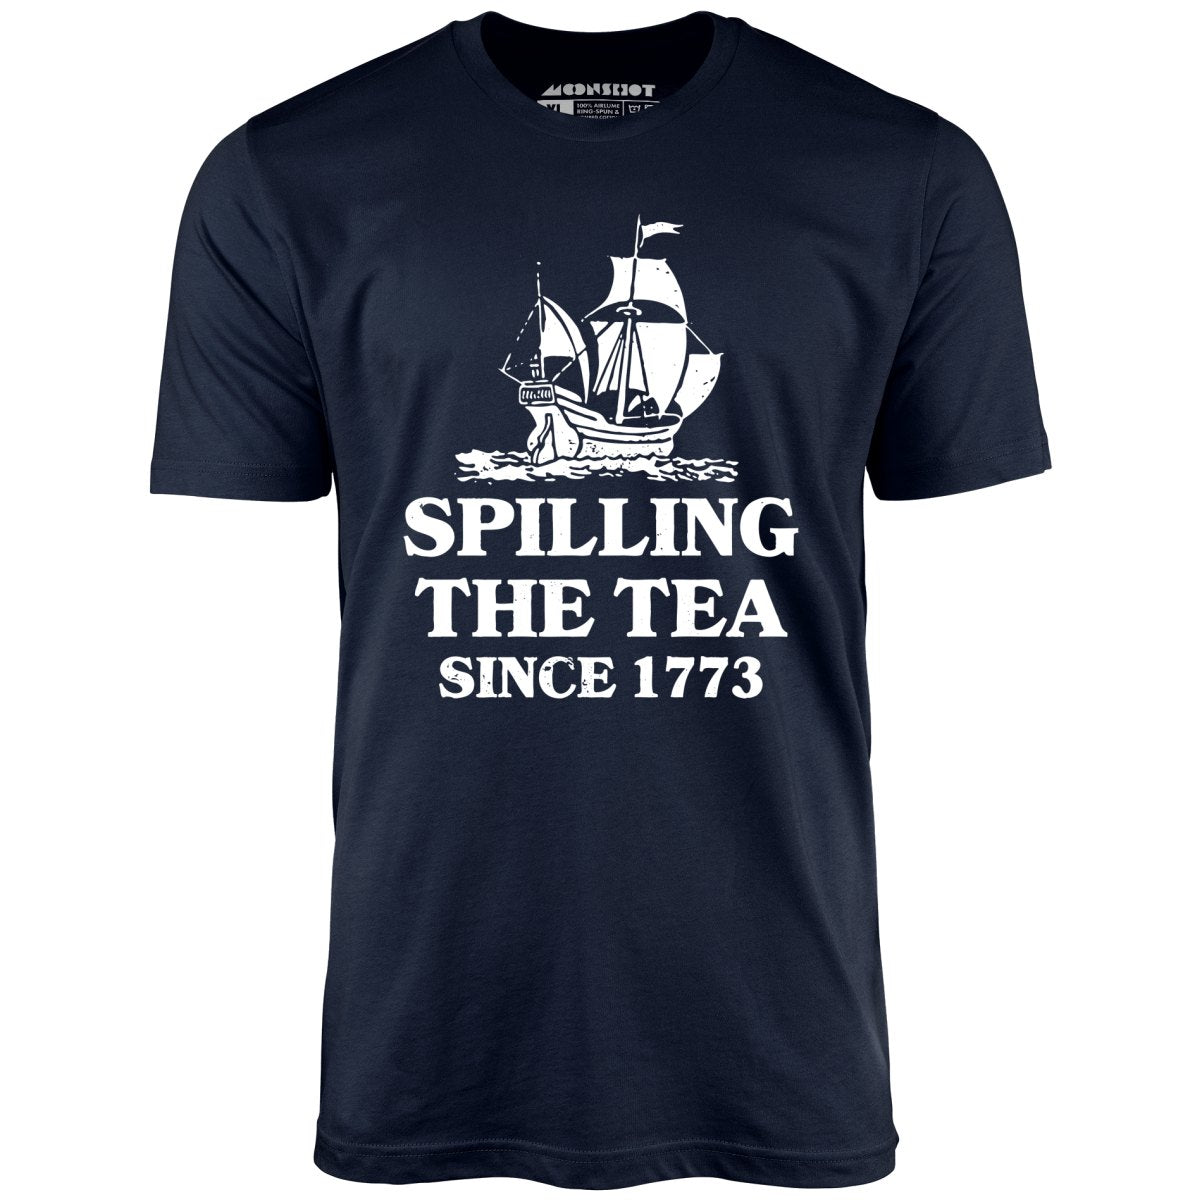 Spilling The Tea Since 1773 - Unisex T-Shirt